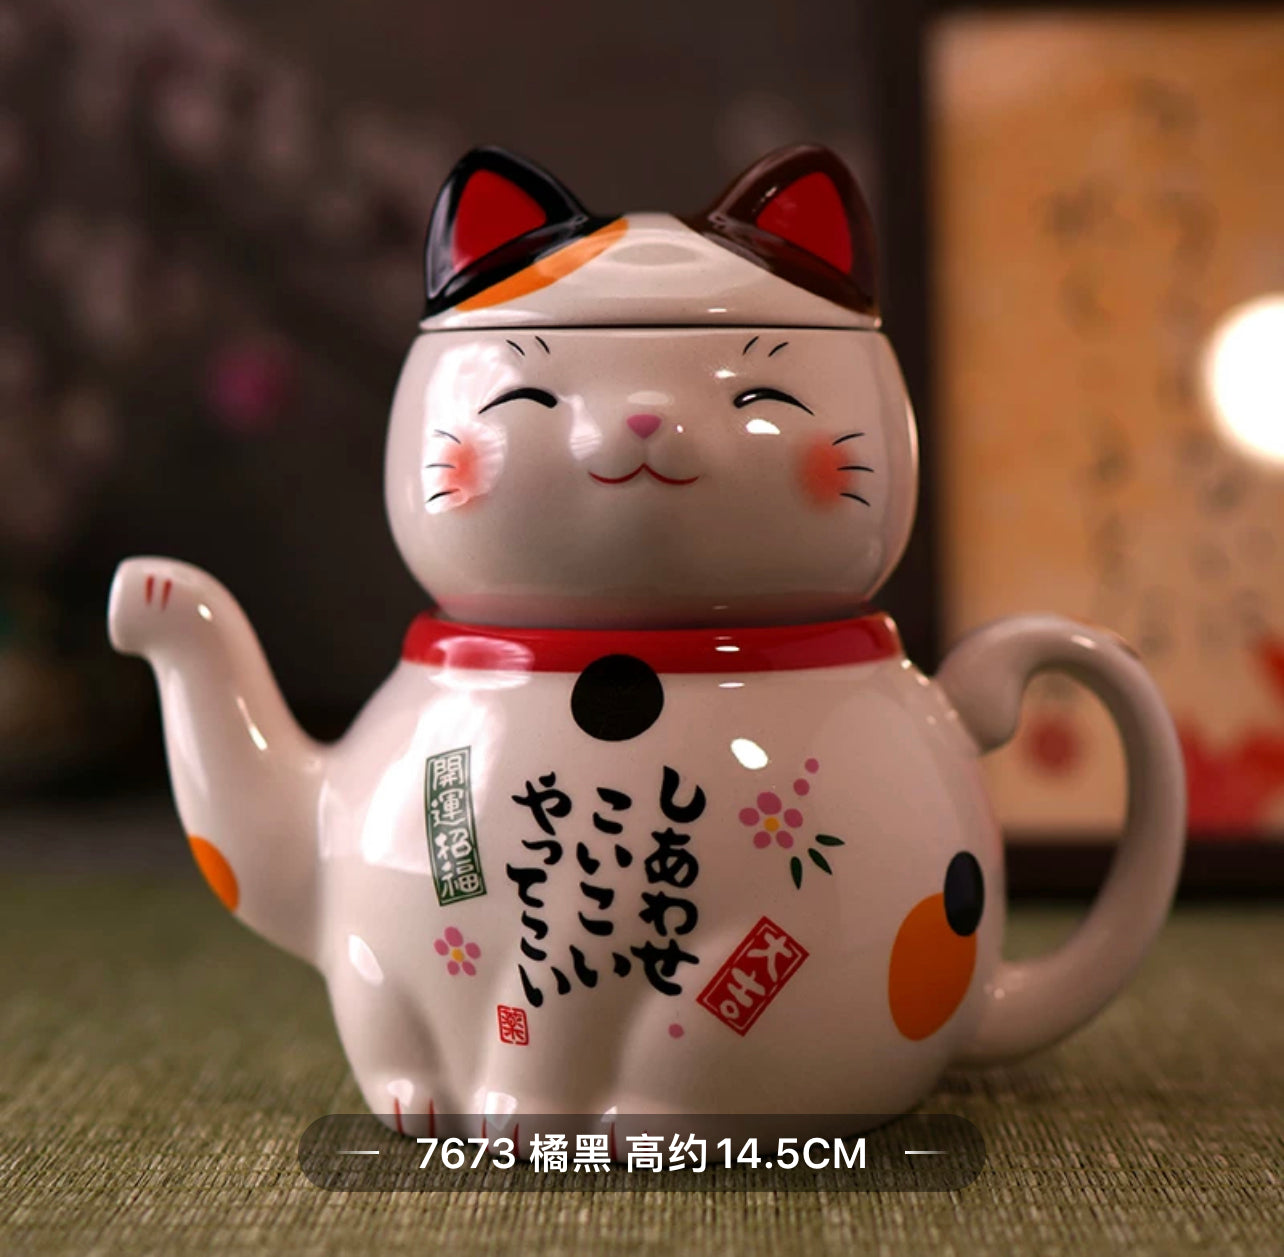 952673 Lucky cat Maneki Neko Beckoning Cat